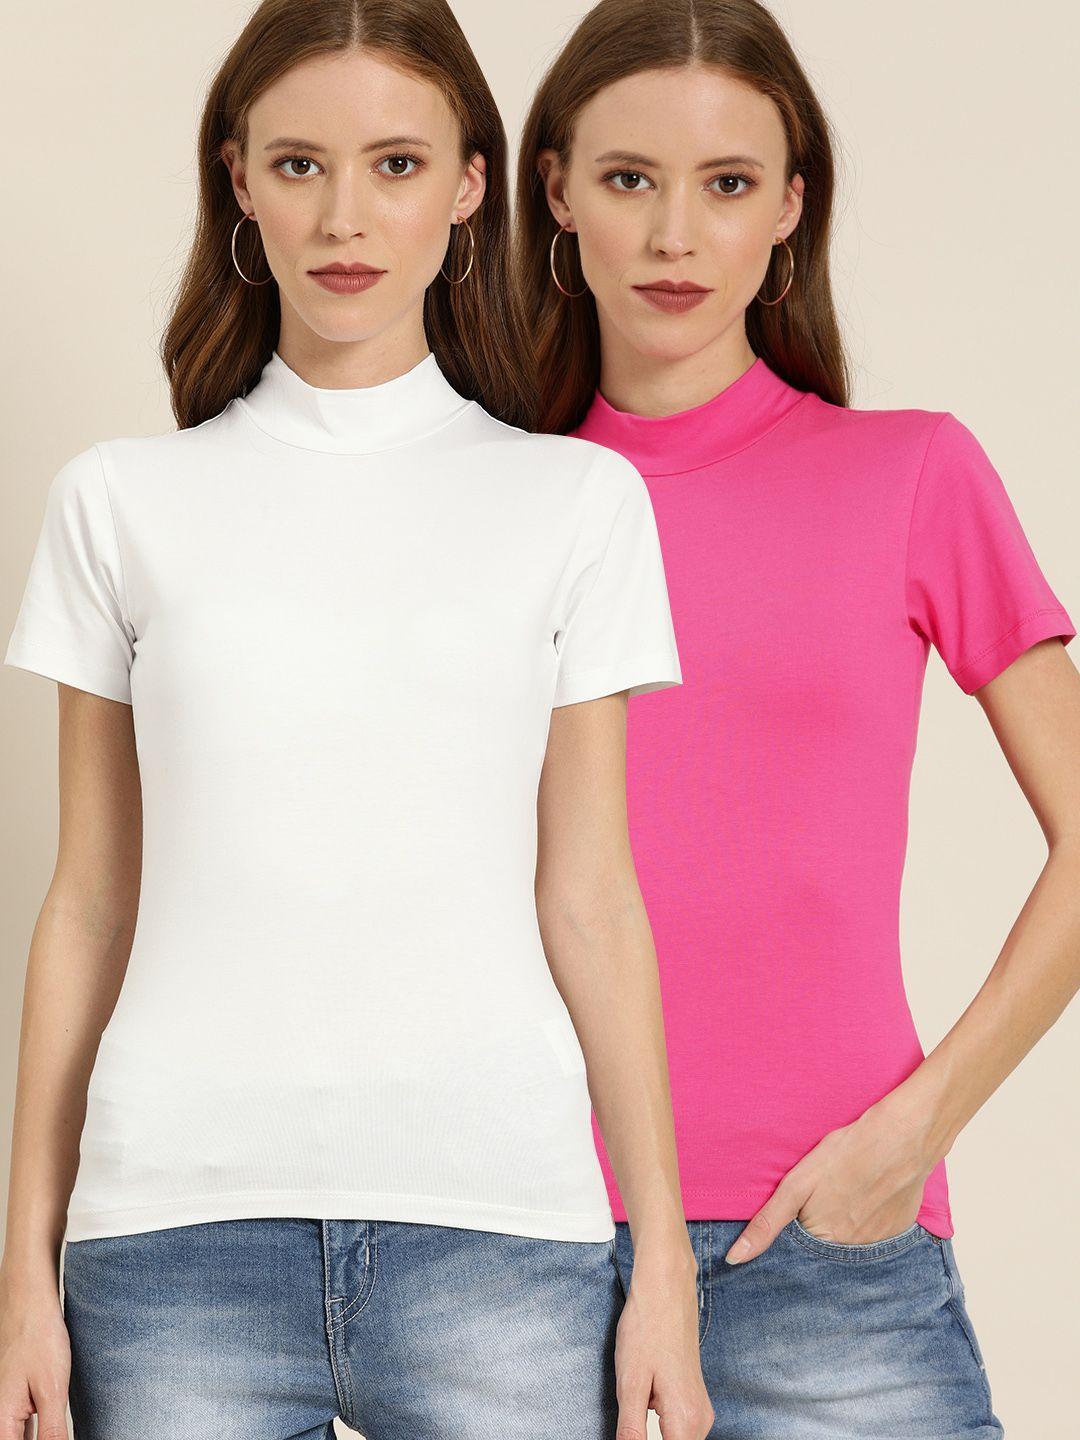 moda rapido pack of 2 women pink solid high neck t-shirt